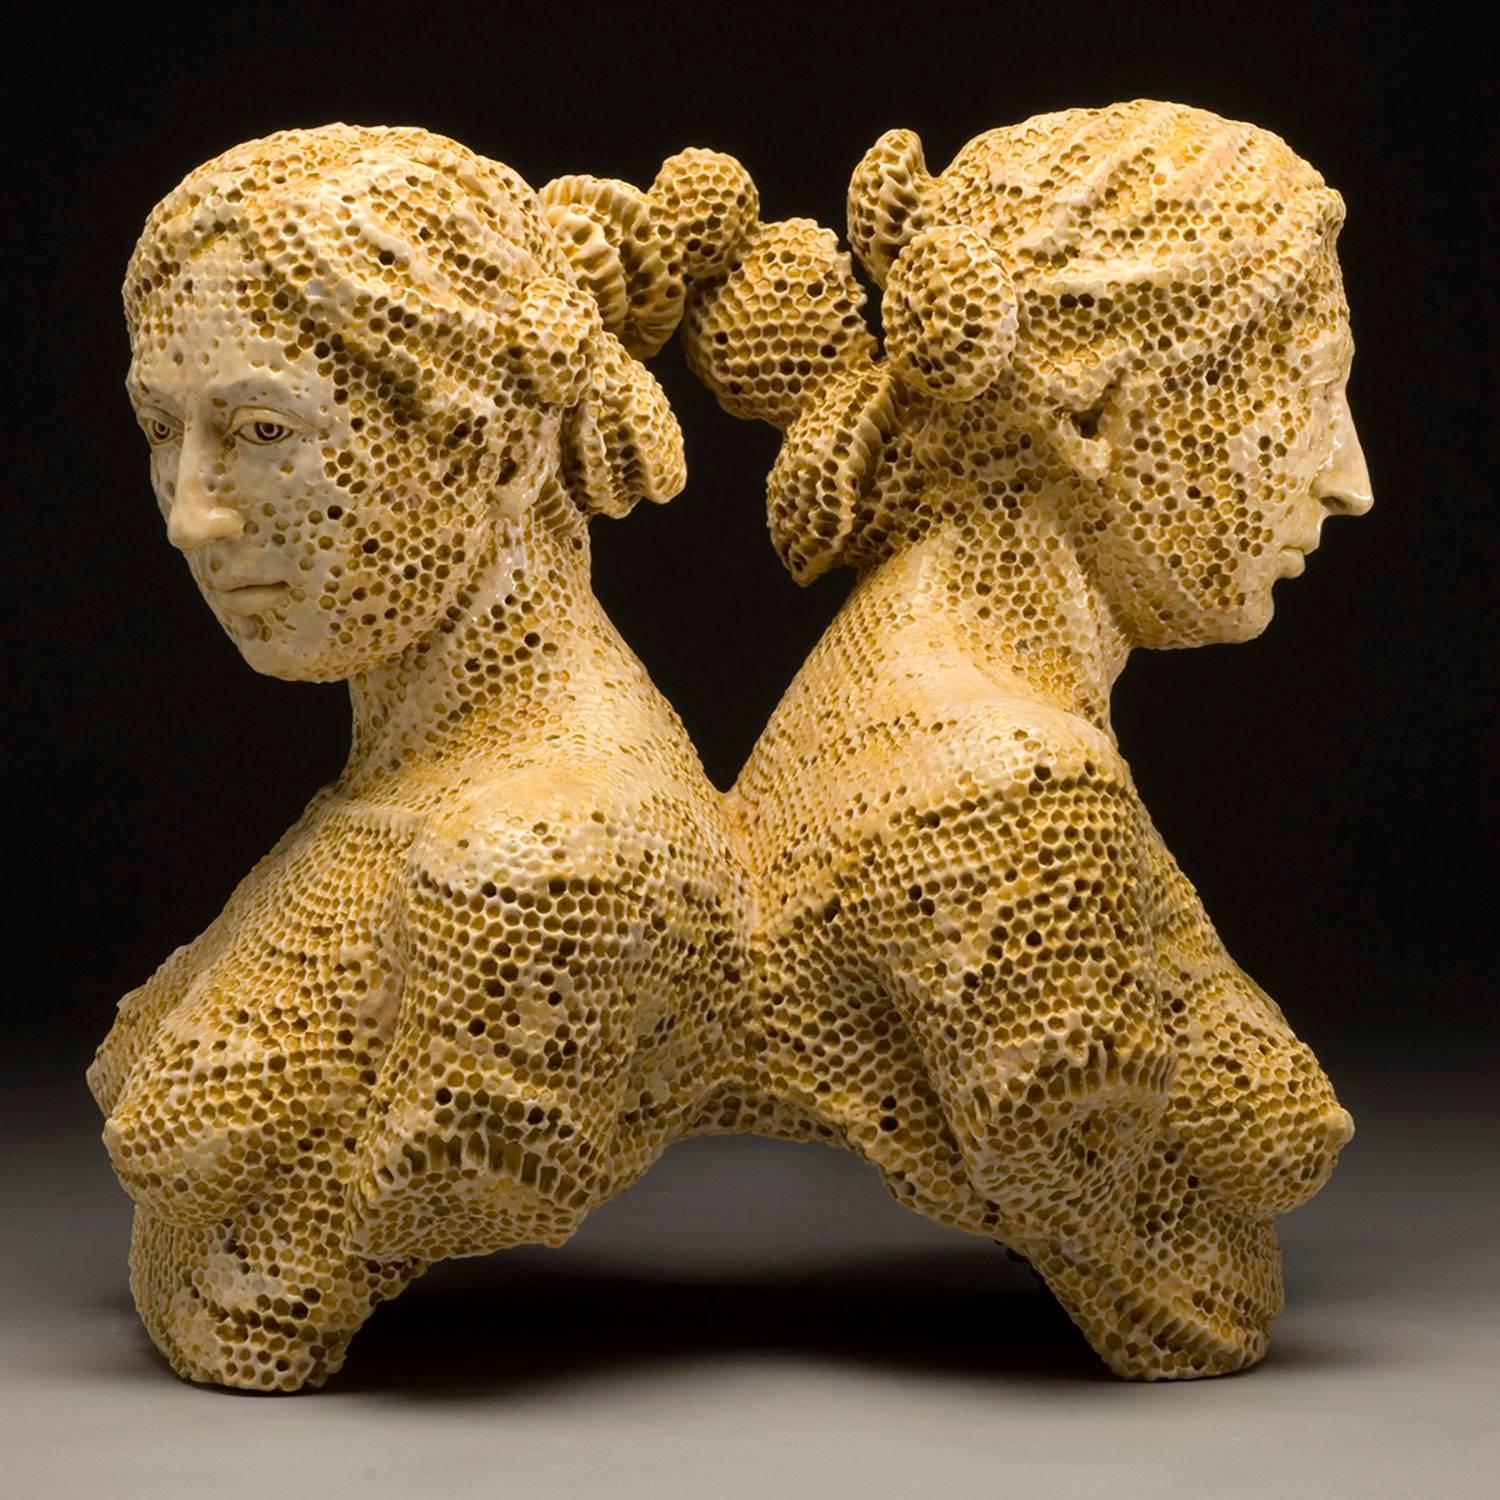 Adrian Arleo Figurative Sculpture - Apiary Twins